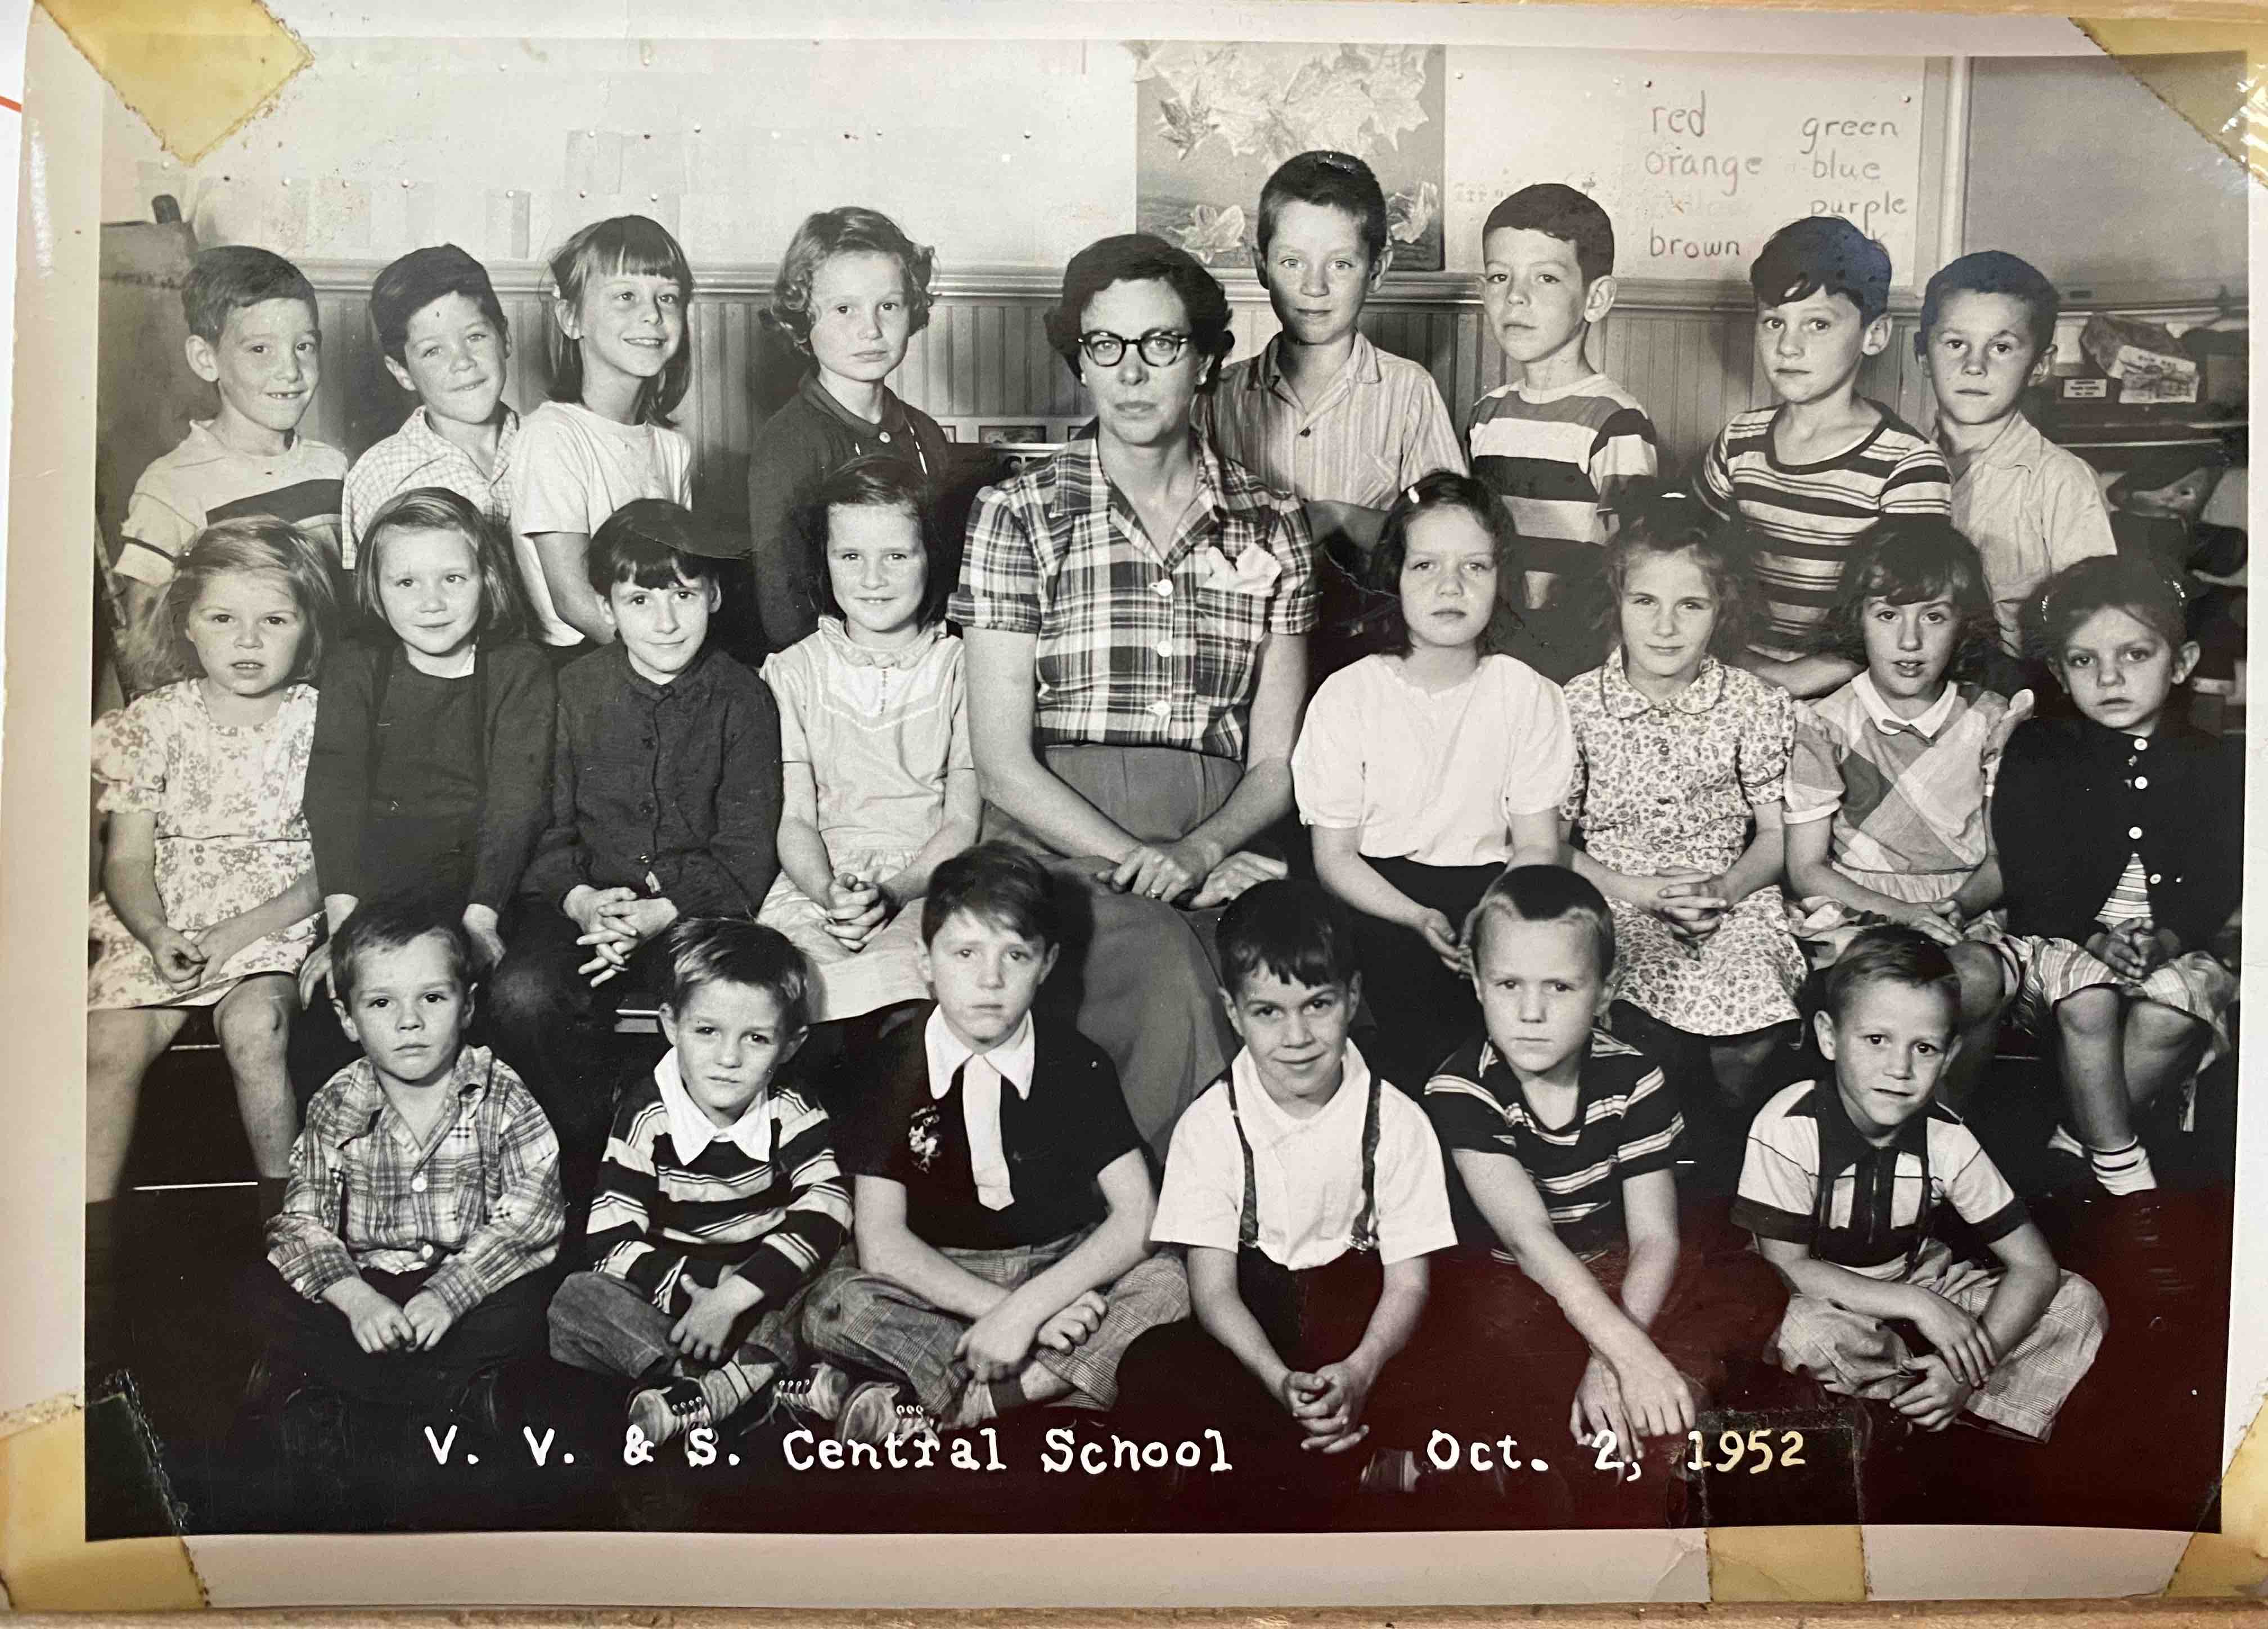 vernon-center-school-photo-oct-2-1952-history-of-vernon-ny